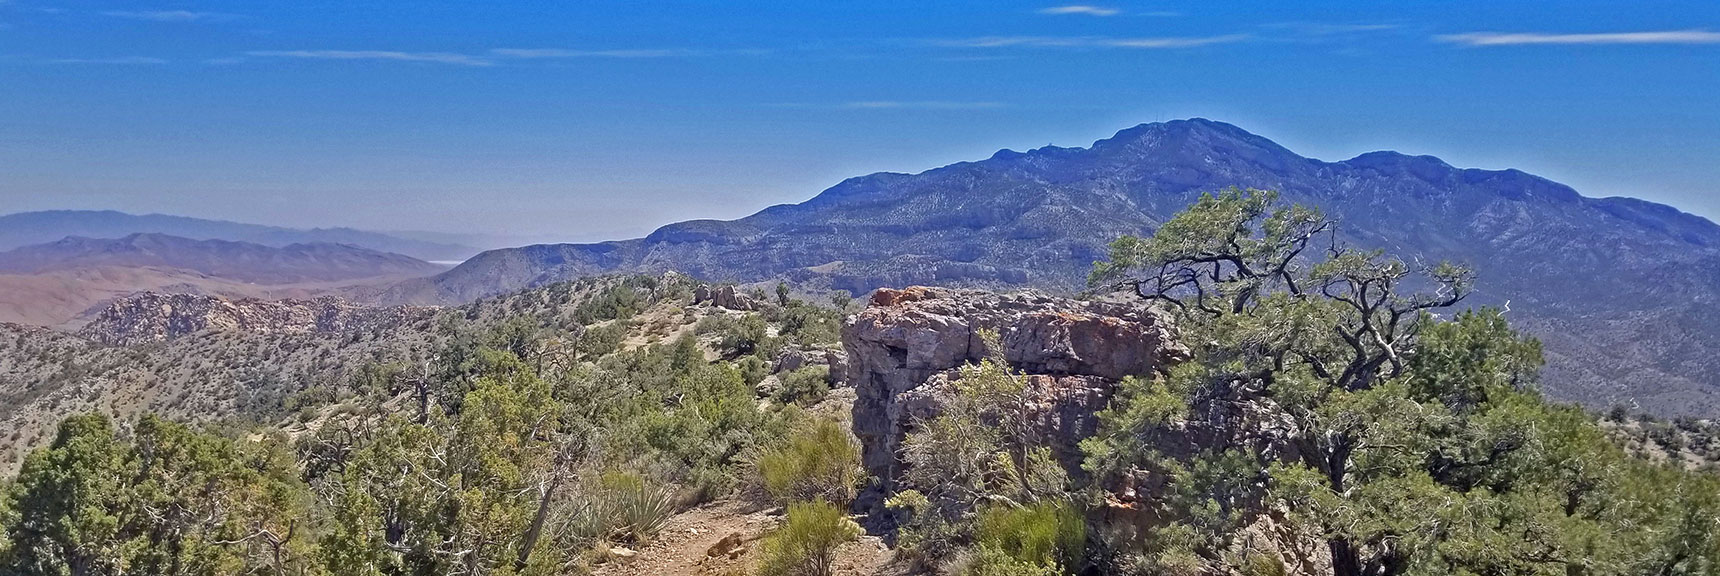 View South Along Ridgeline to Potosi Mt. South Peak Visible | Rainbow Mountains Upper Crest Ridge, Nevada